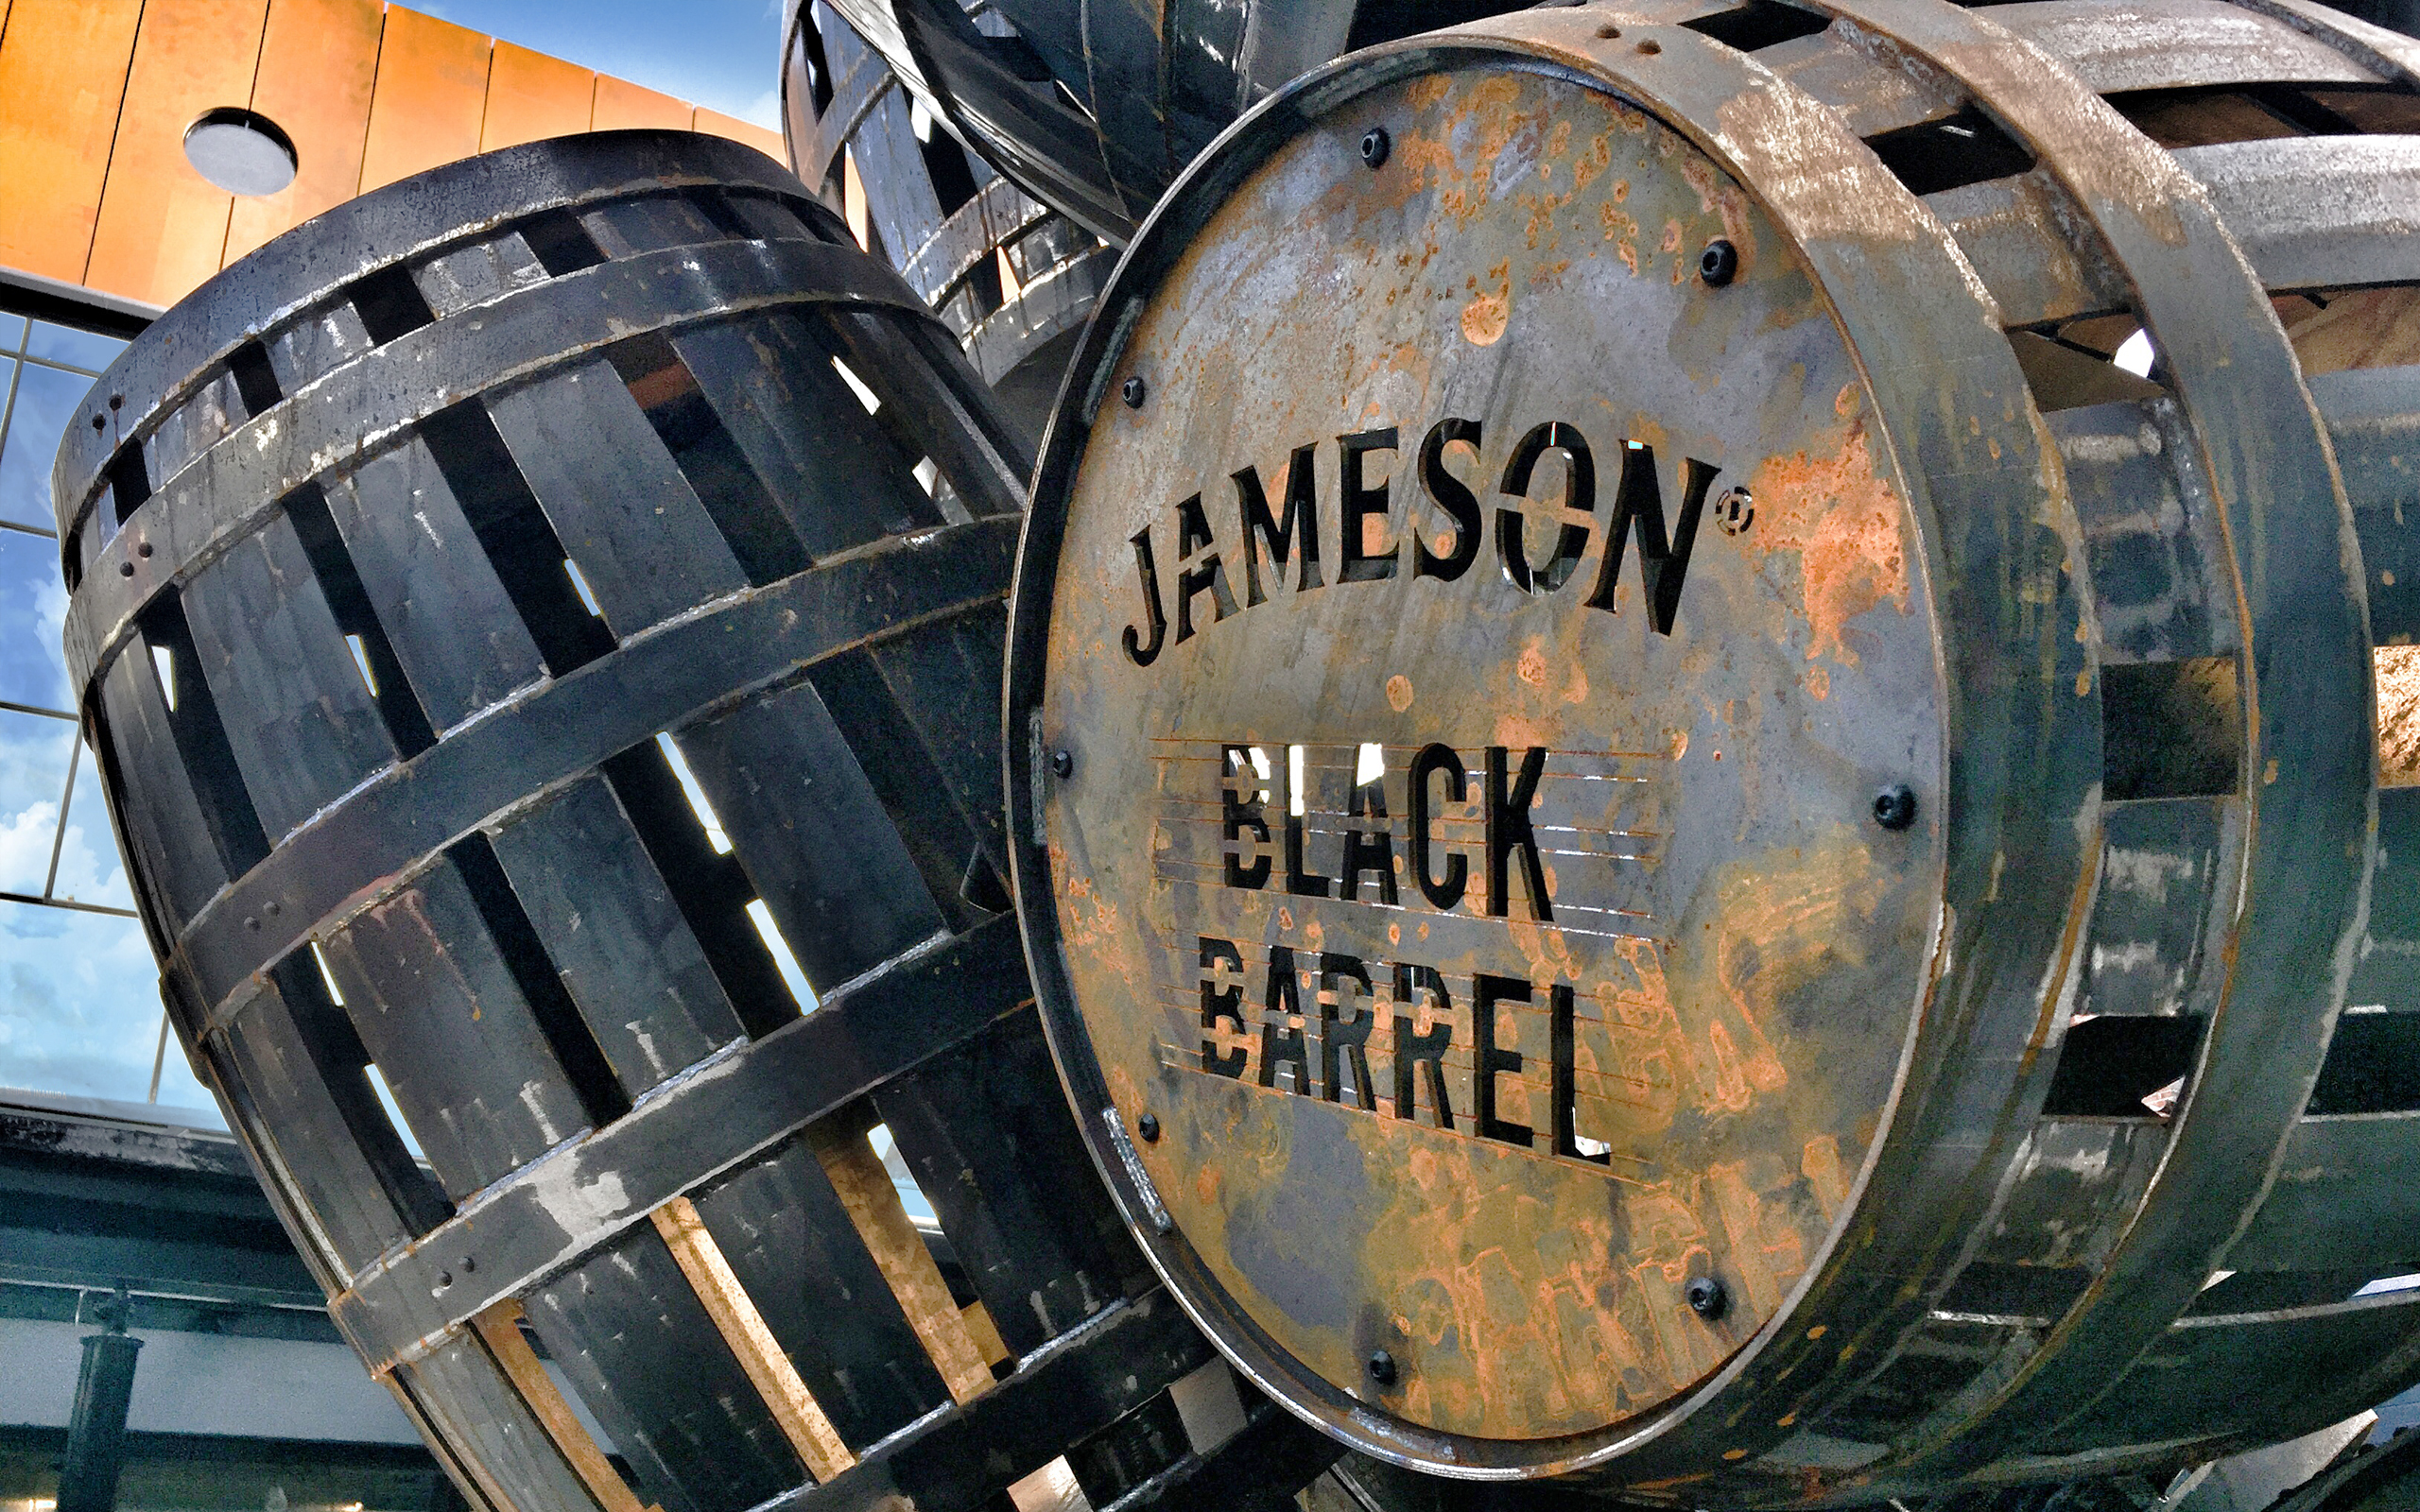 Jameson Black Barrel Sculpture